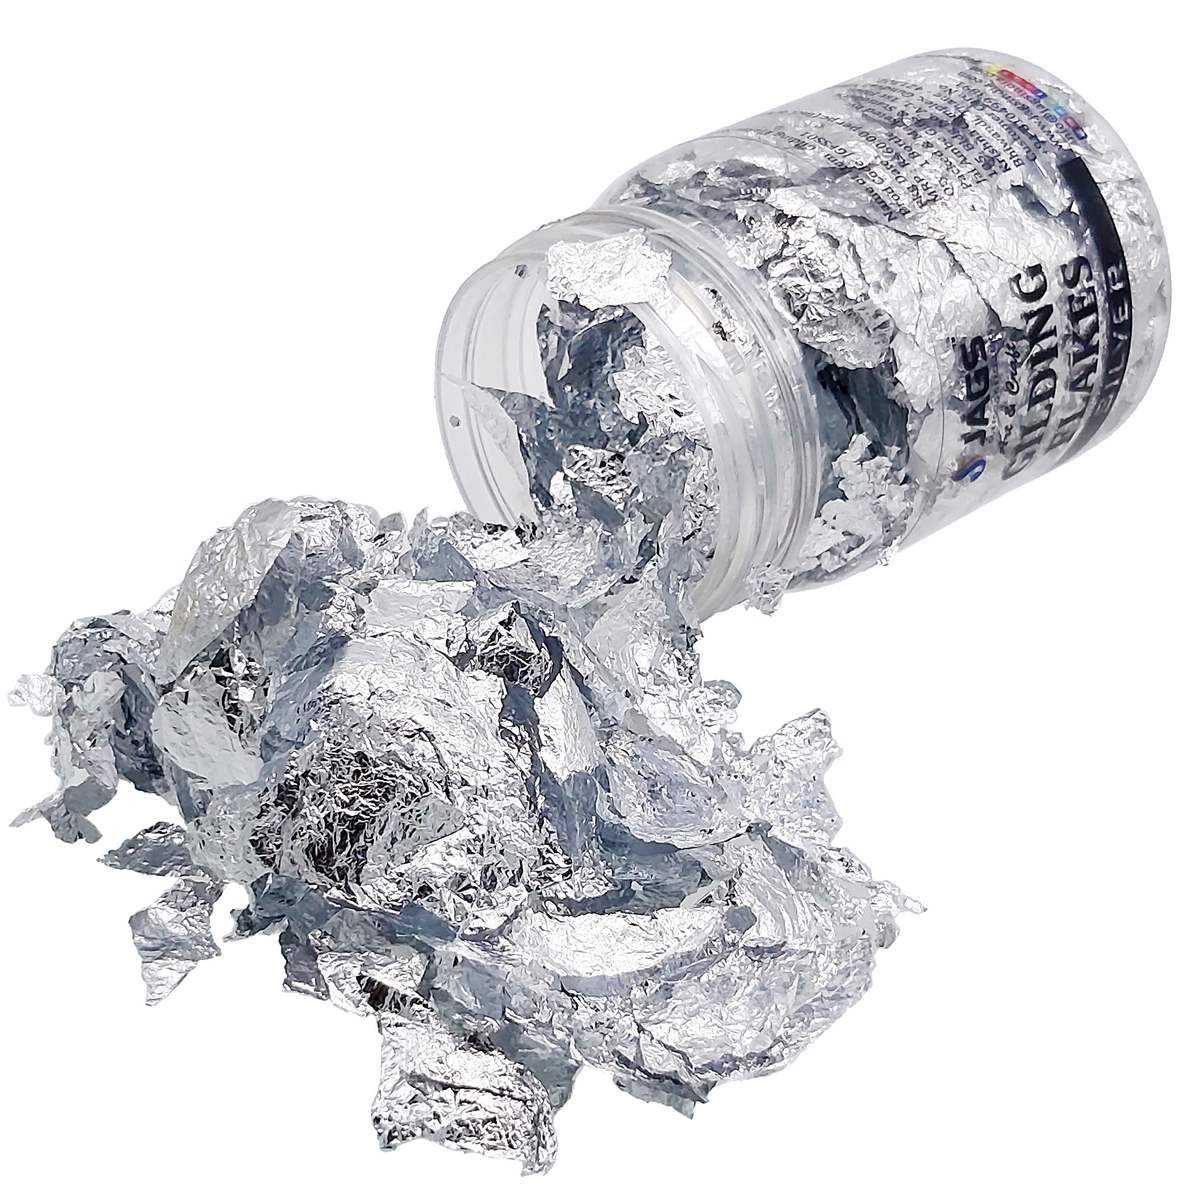 jags-mumbai Glitter Powder JAGS Gilding Flakes Small Bottel Silver